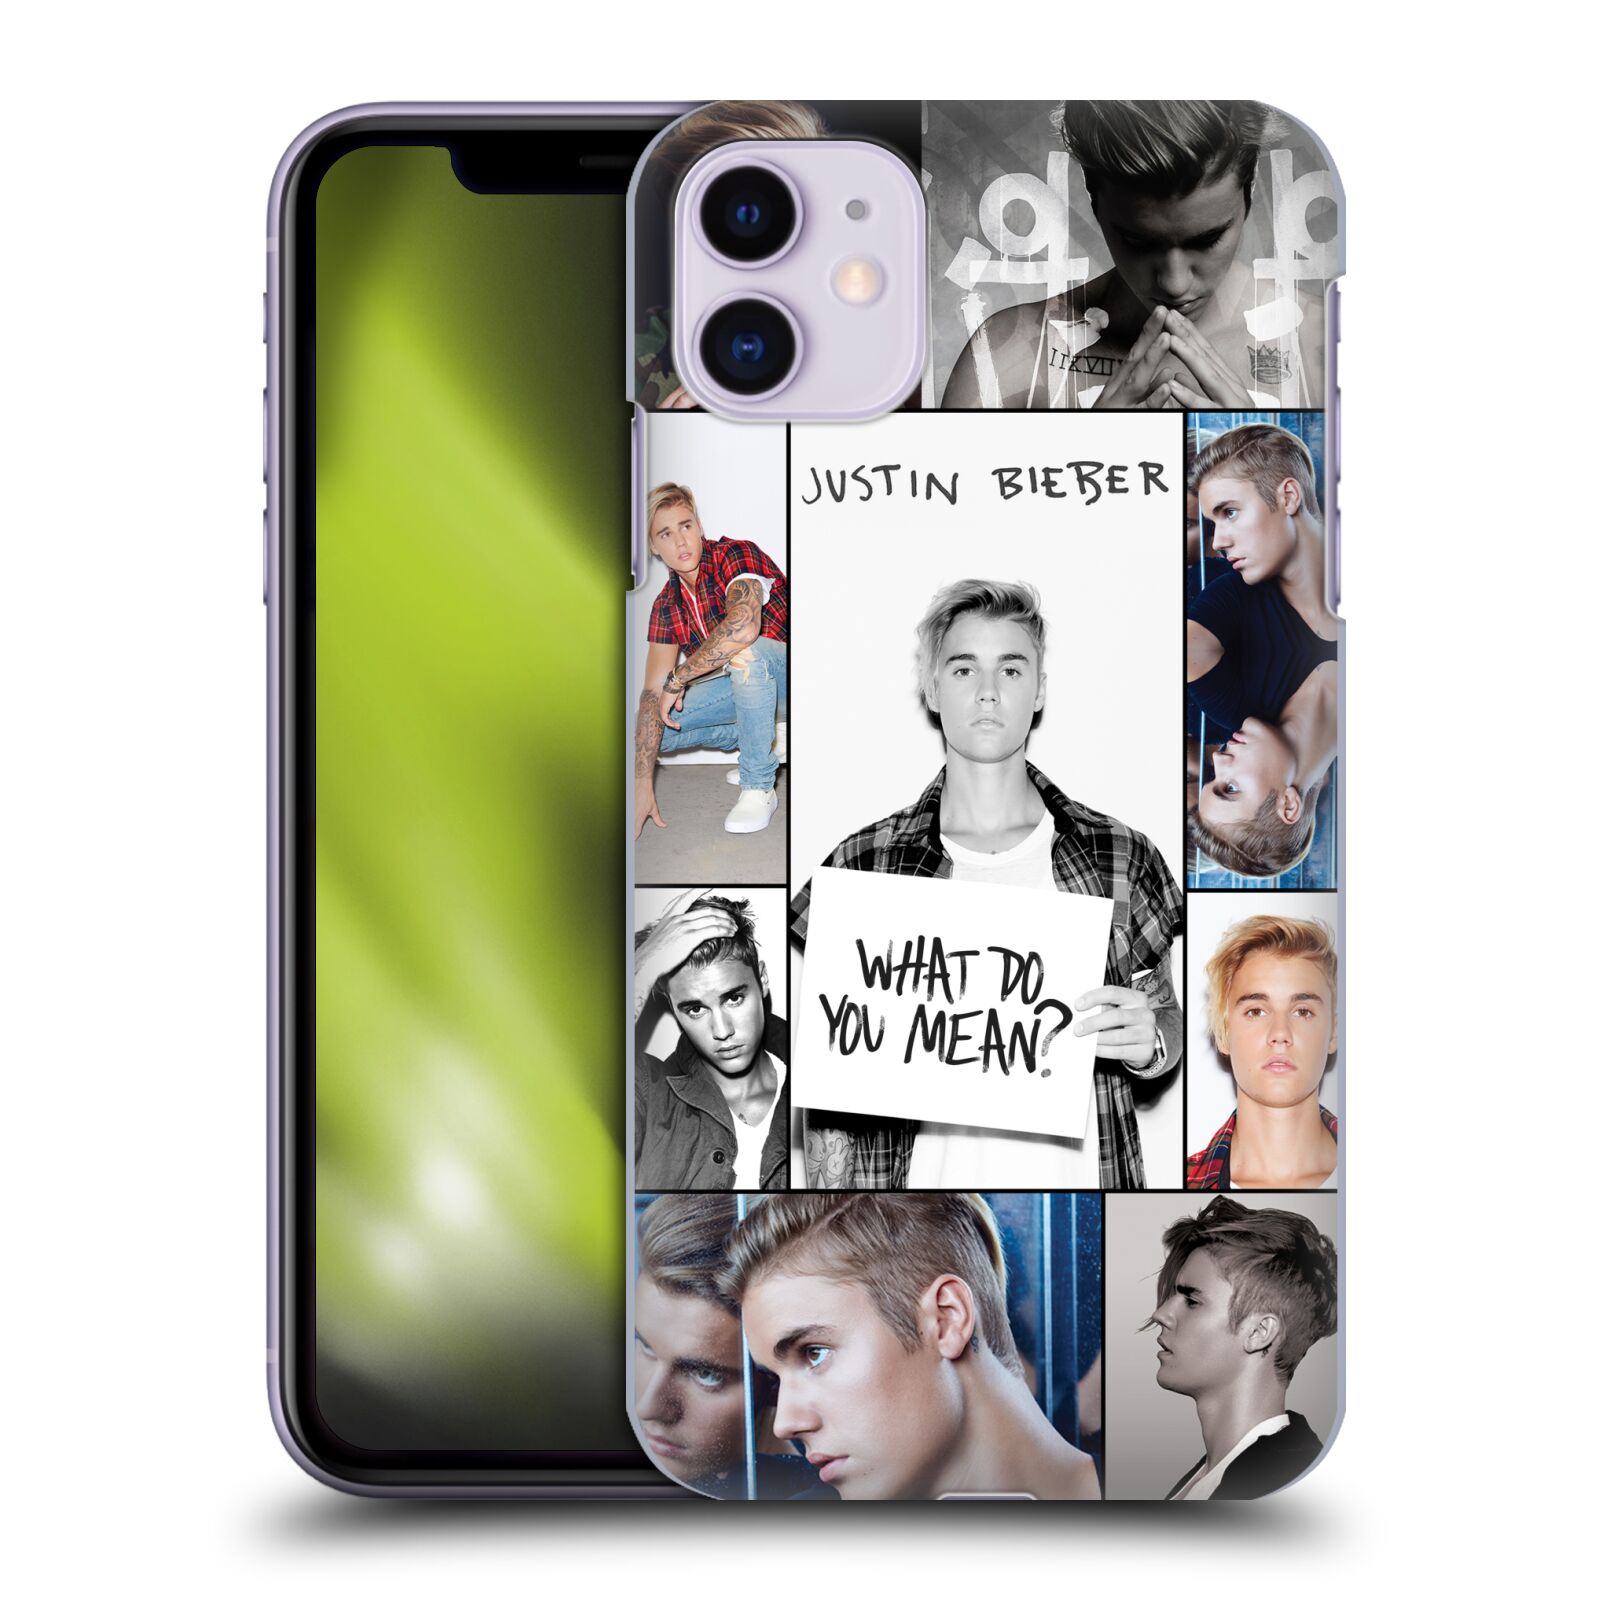 Pouzdro na mobil Apple Iphone 11 - HEAD CASE - Justin Bieber foto Purpose malé fotky